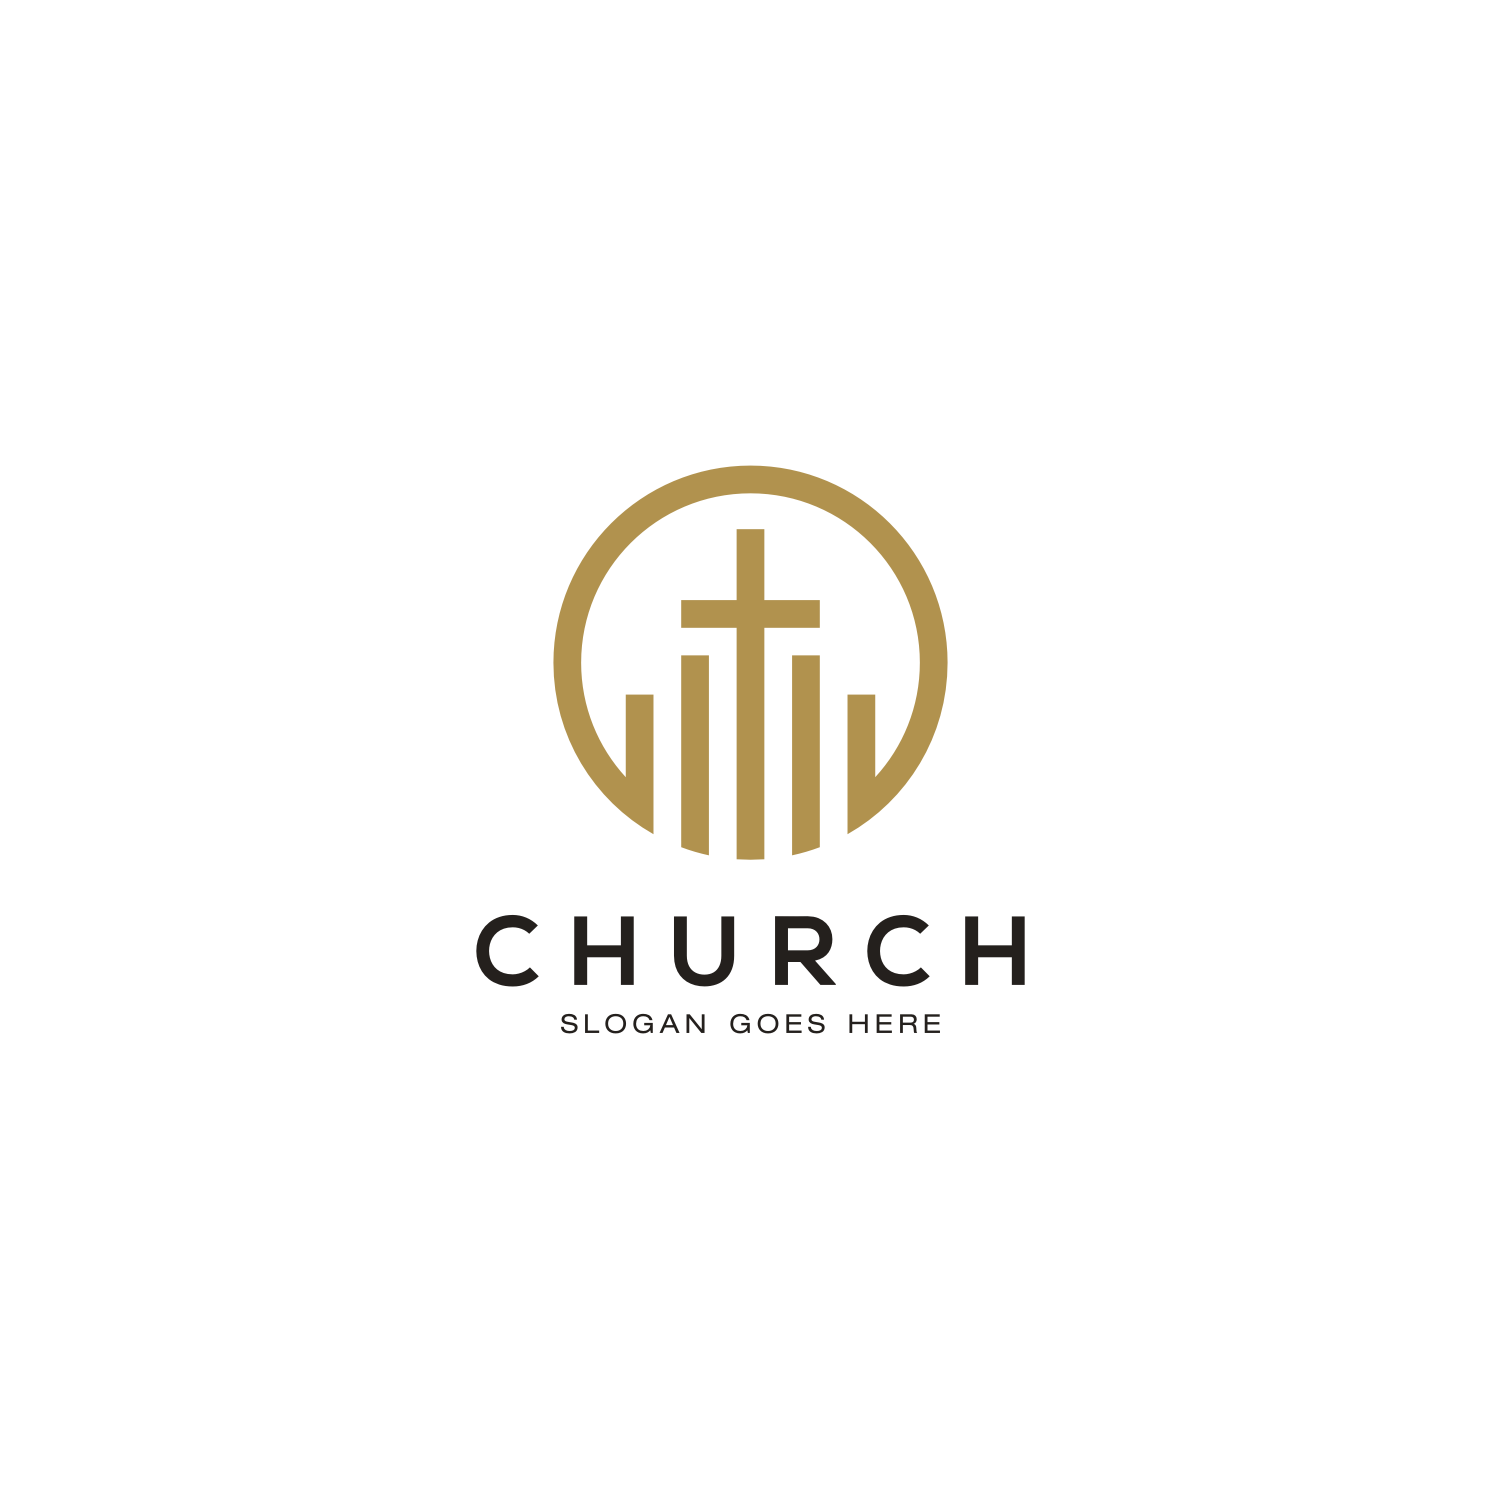 Line Art Church Christian Logo Design Premium Vector Cover Image.